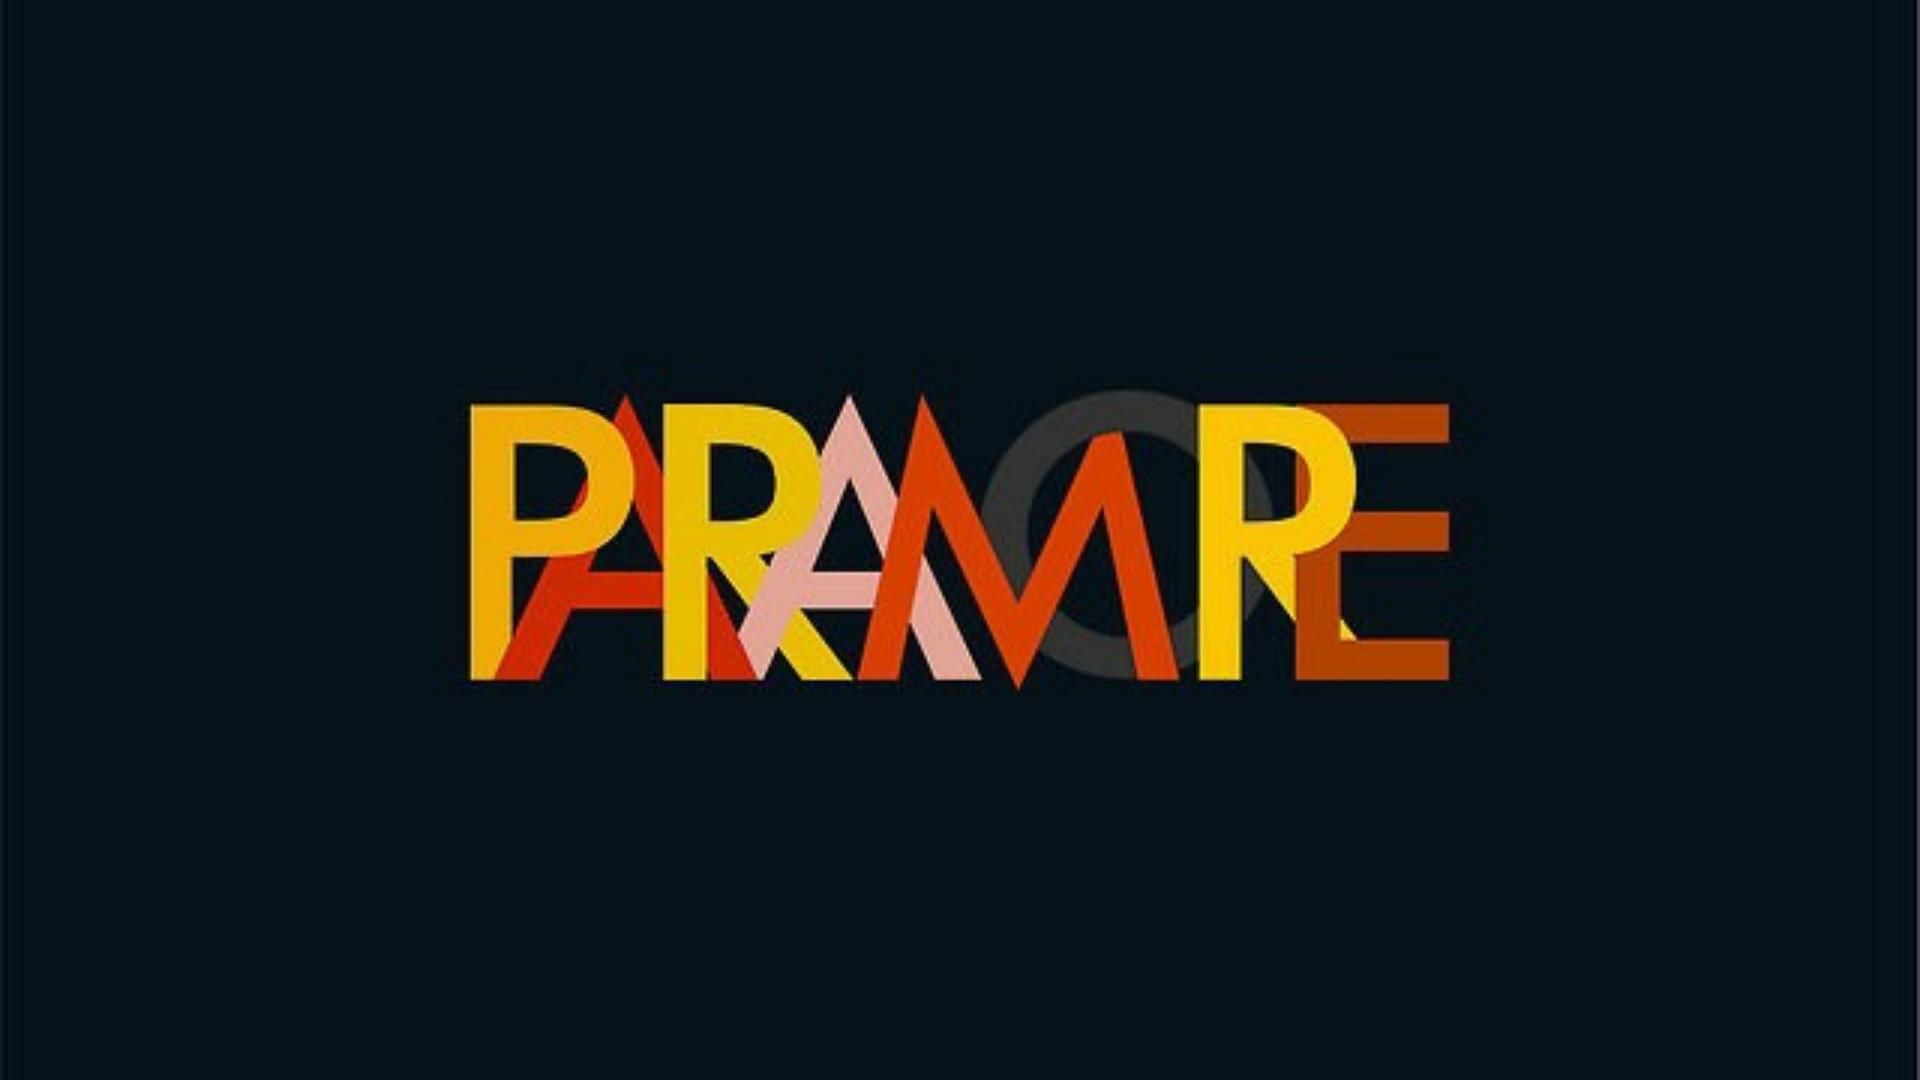 Paramore Wallpaper Group. Paramore wallpaper, Paramore logo, Paramore